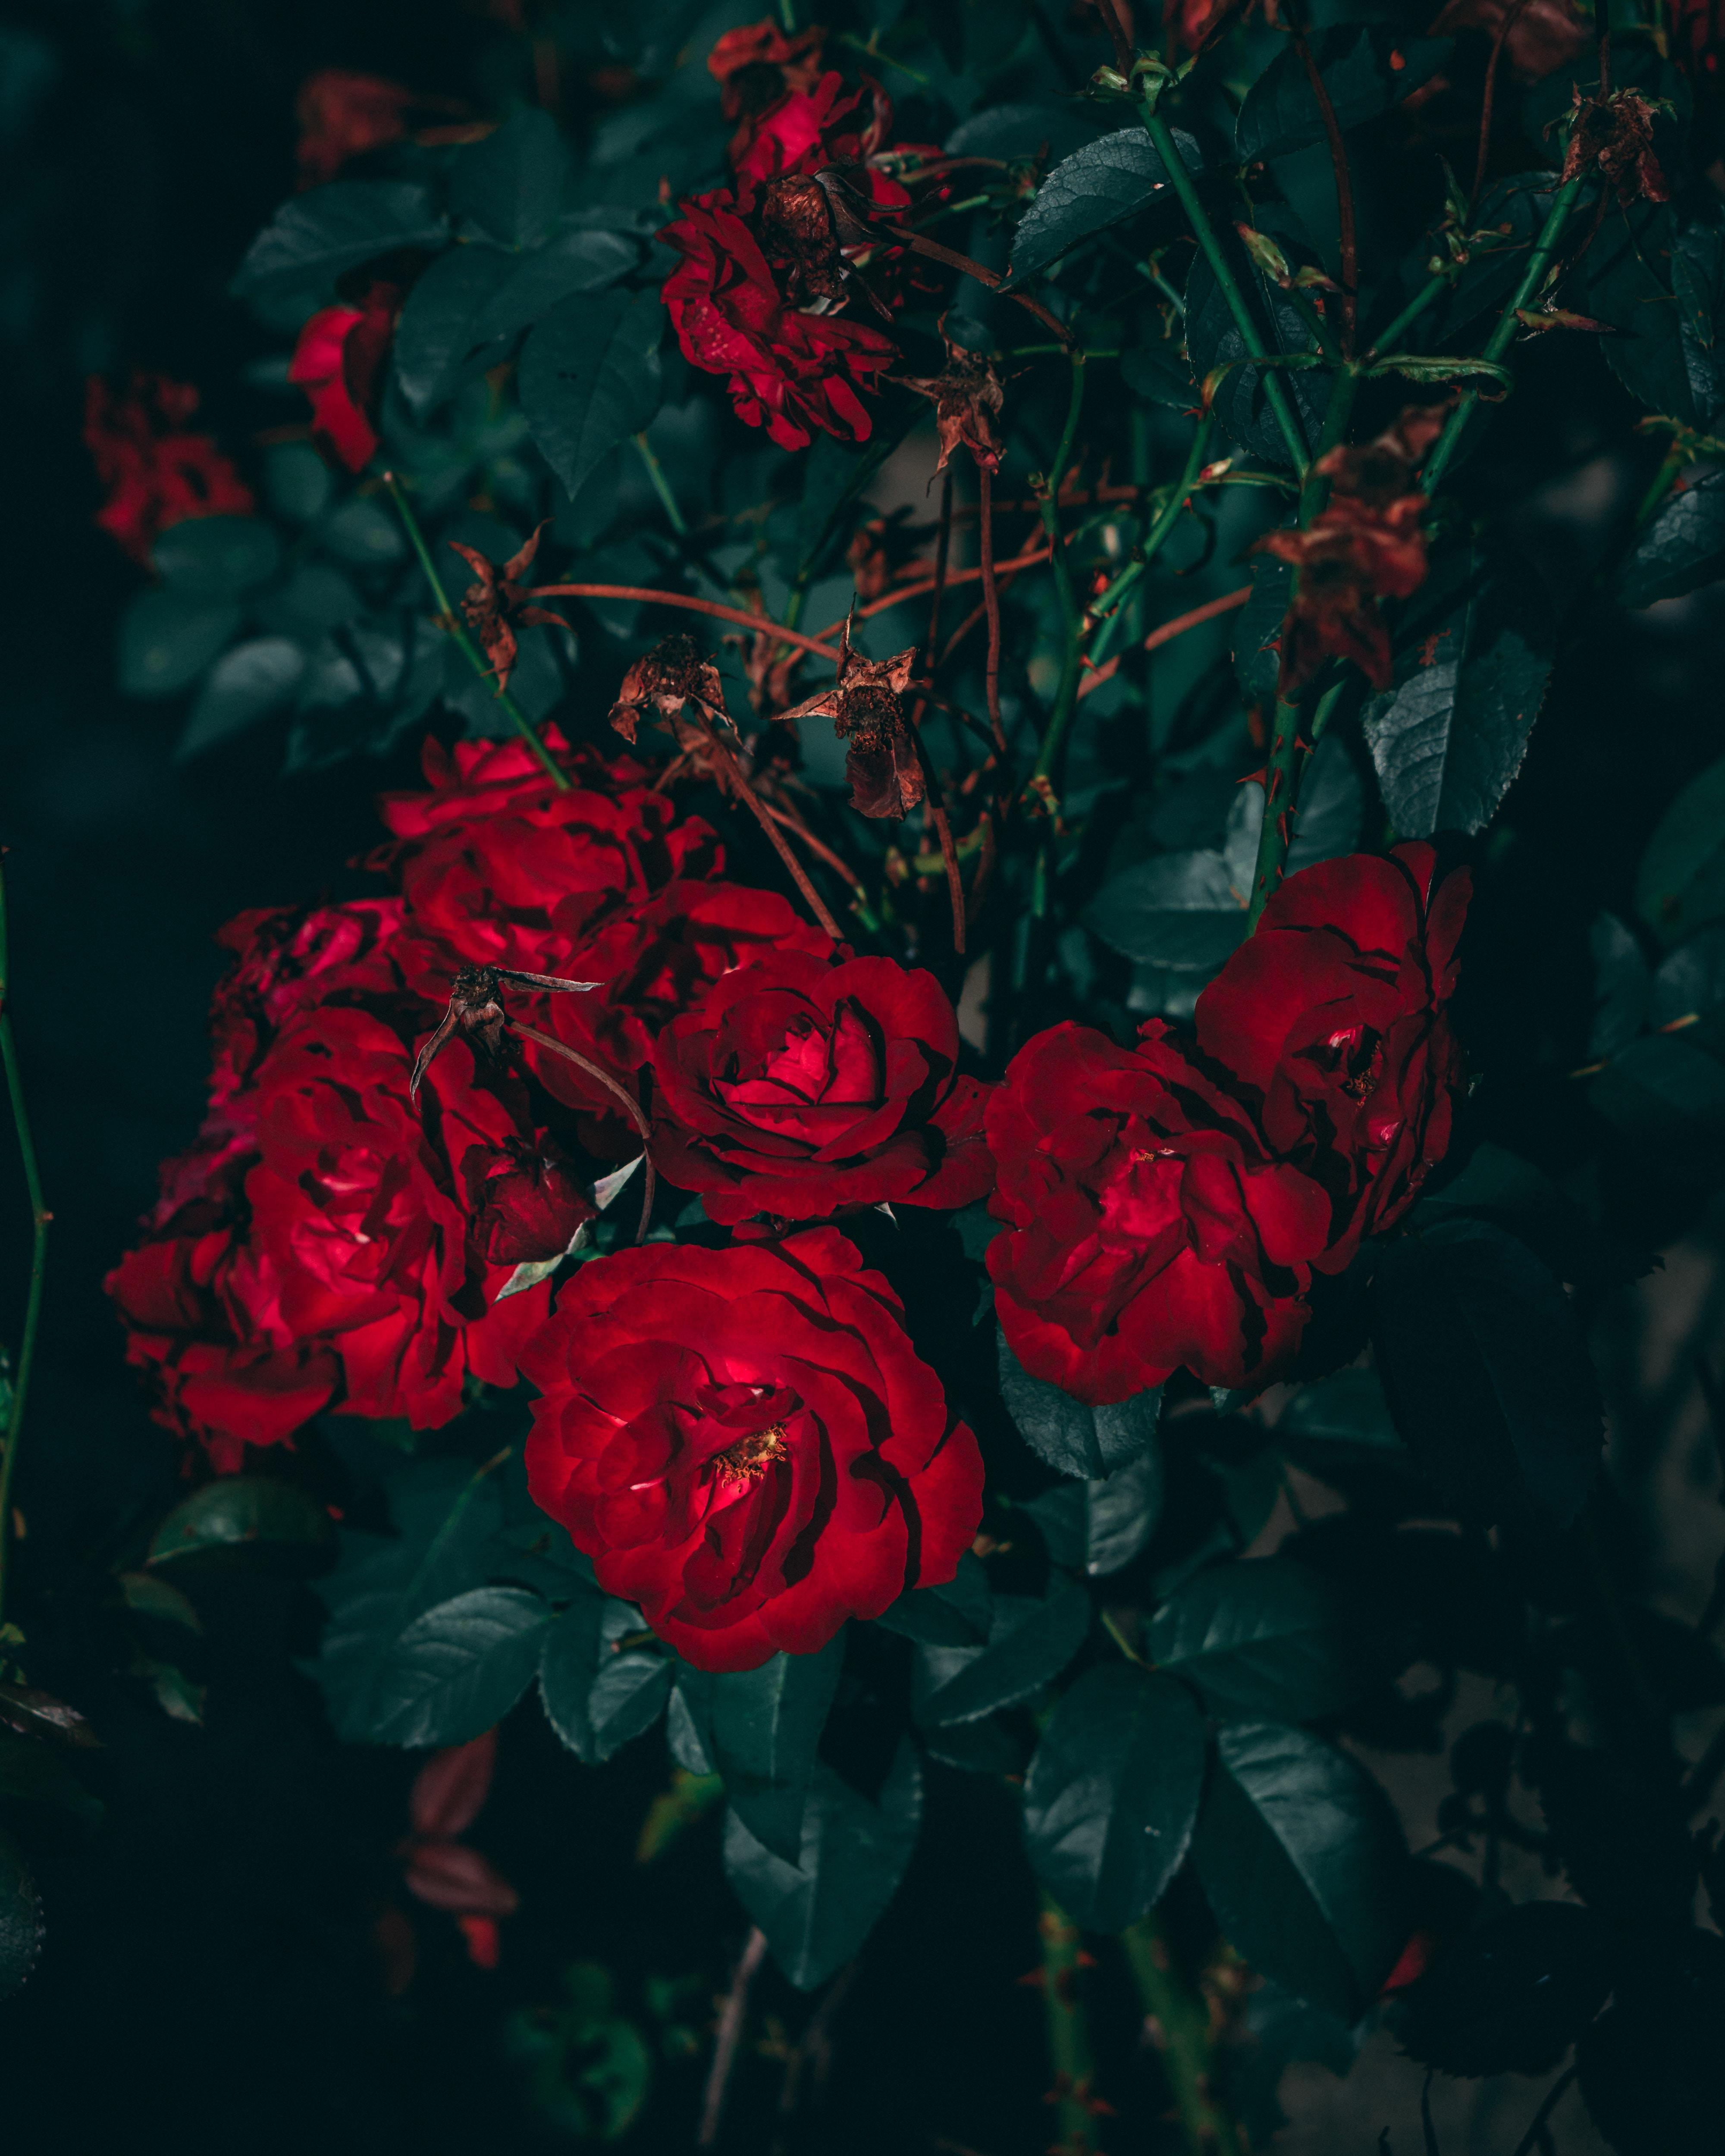 Dark red rose aesthetic